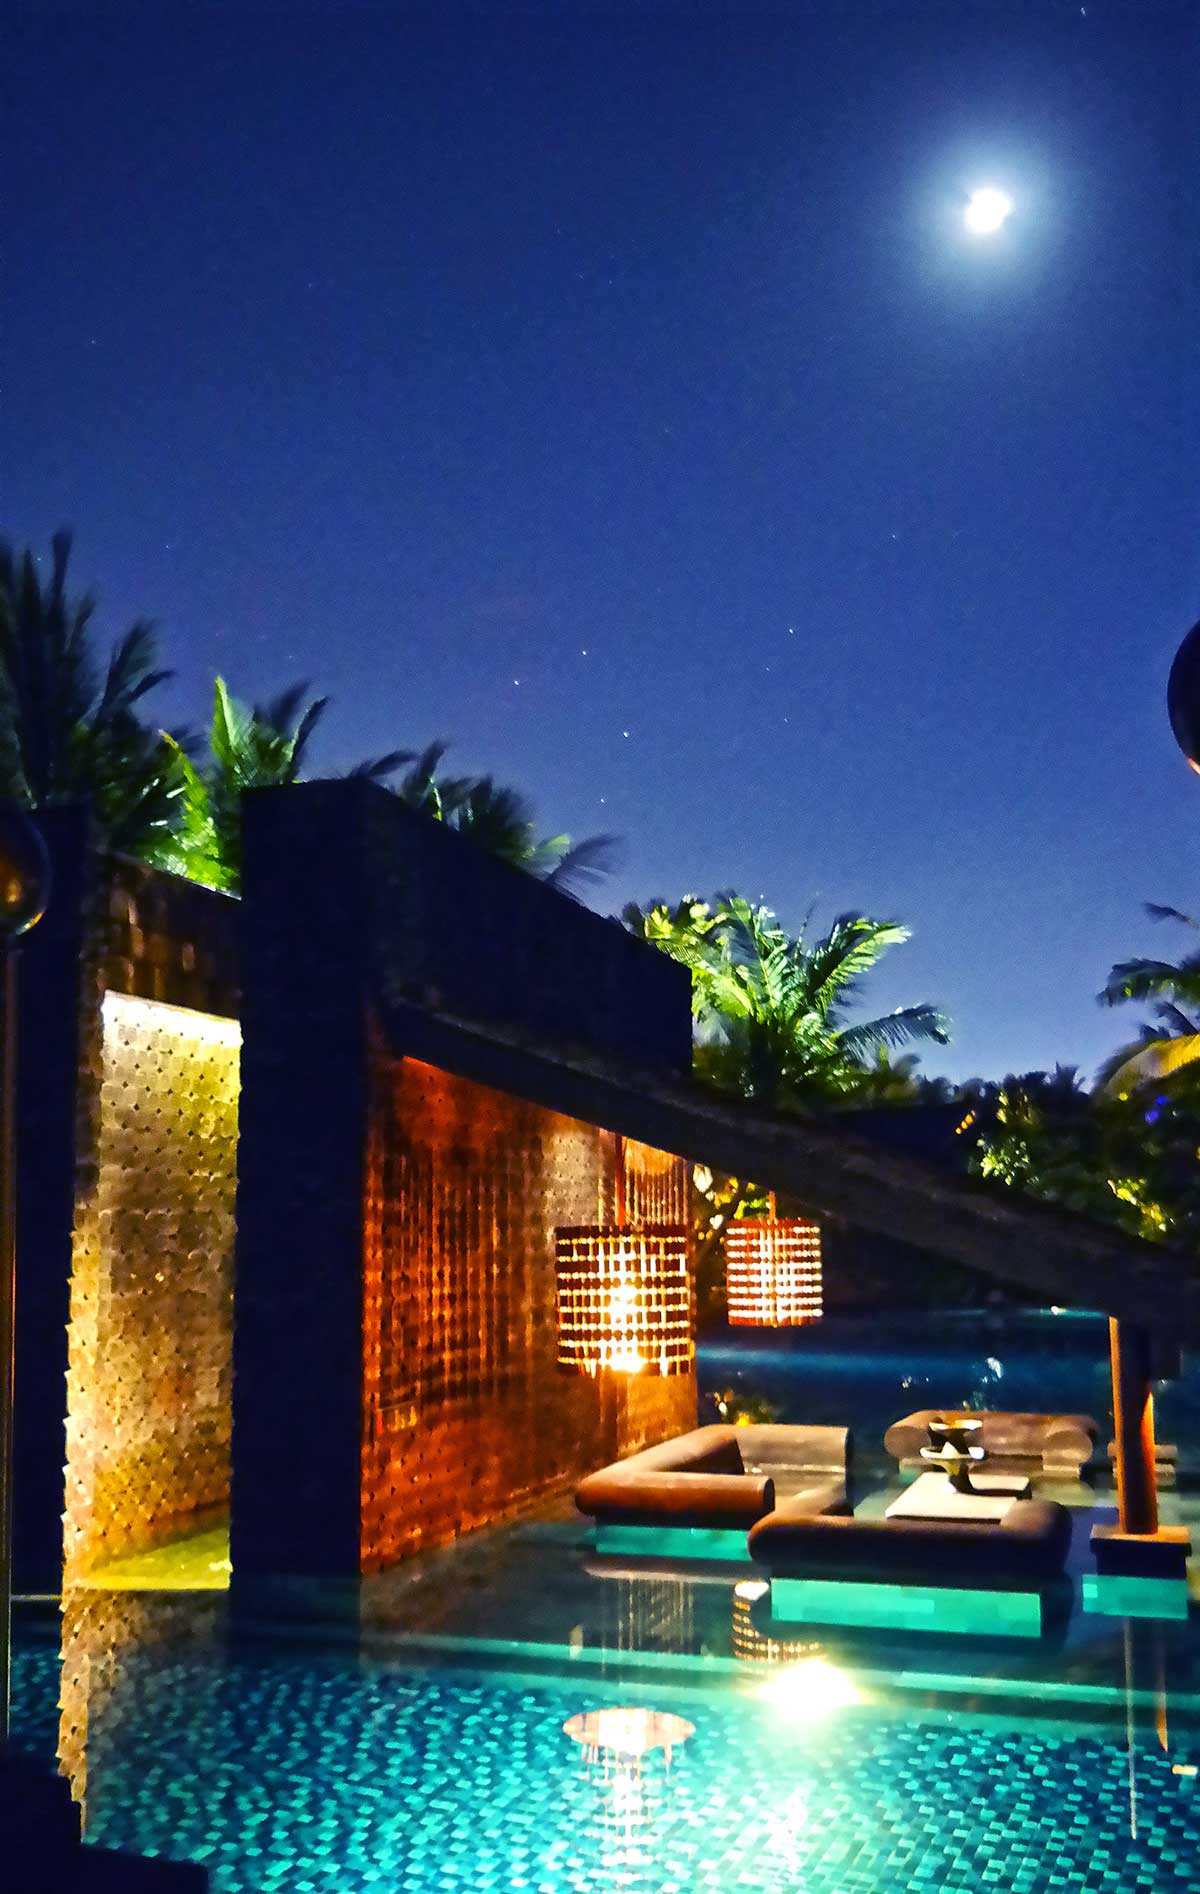 St Regis pool at night time in Bali